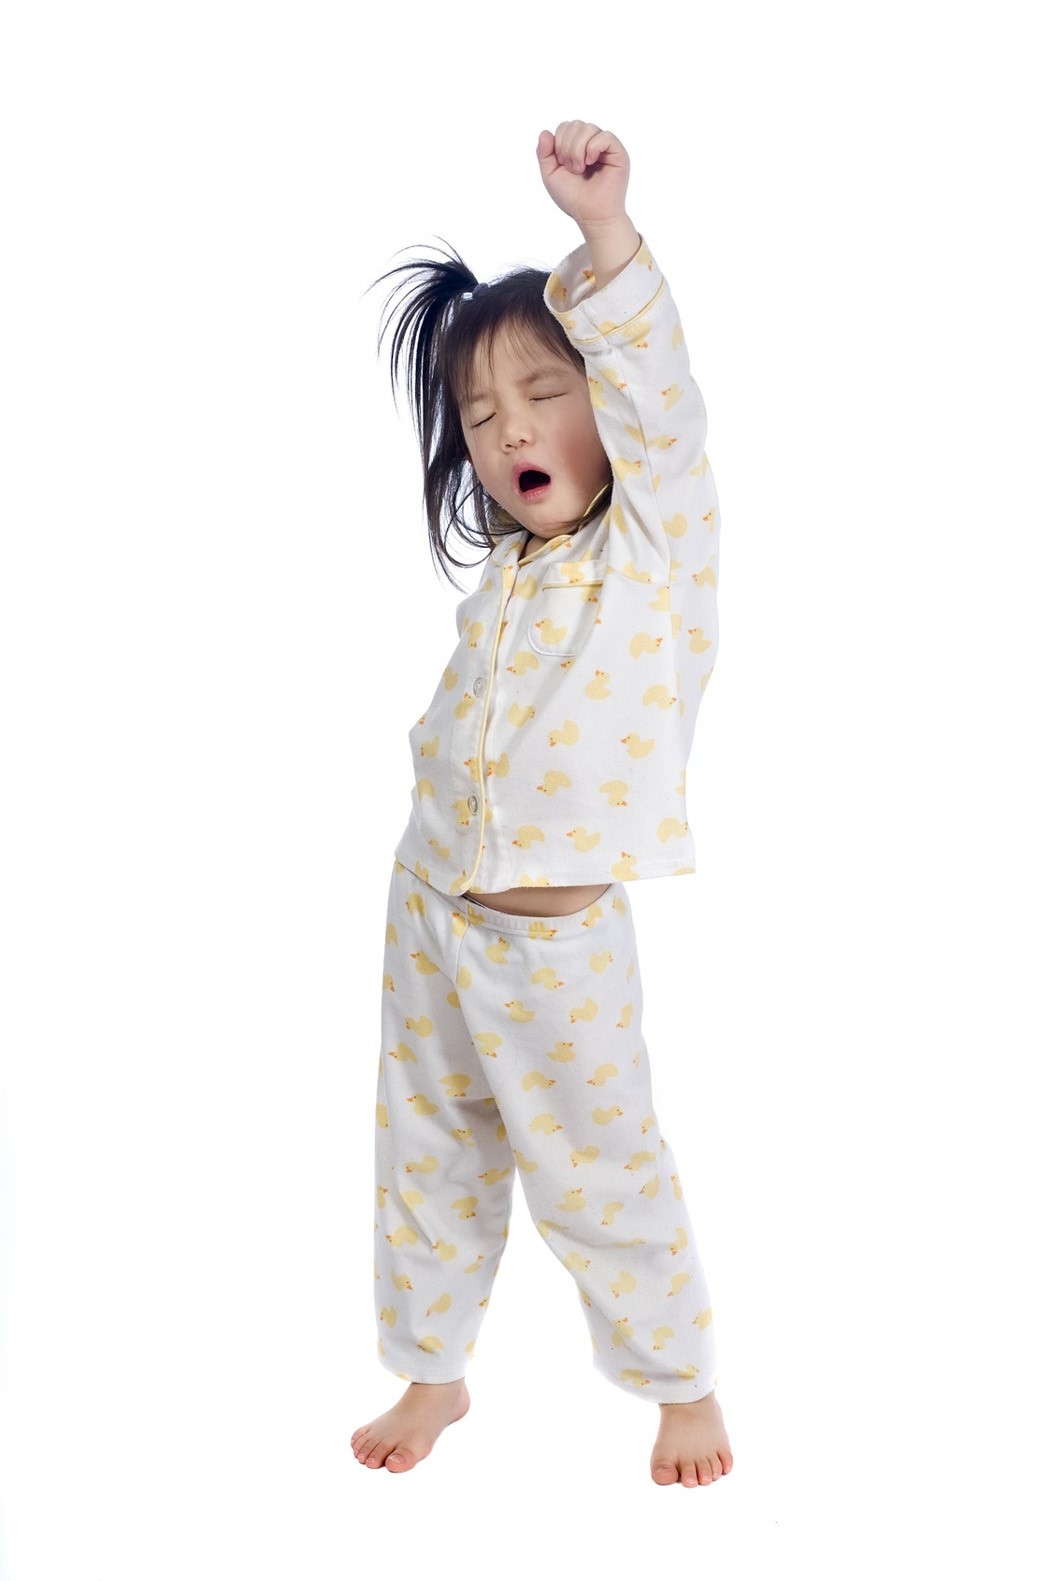 Treating Sleep Apnea in Children